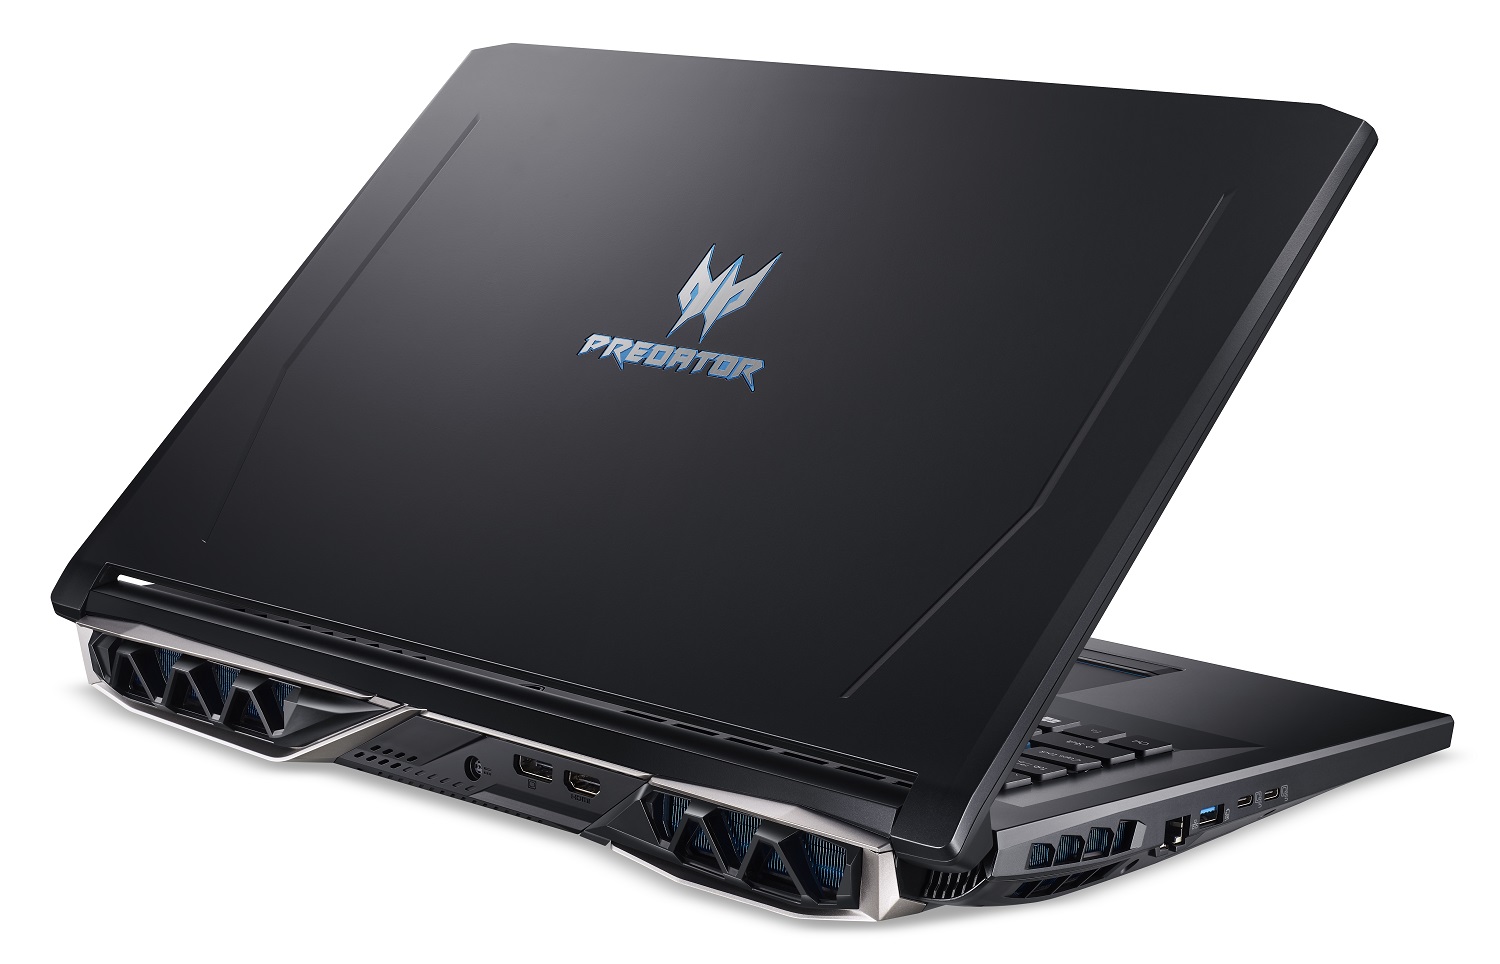 Acer Predator Helios 500 PH517-61-R0GX Gaming Laptop, AMD Ryzen 7 2700 Desktop Processor, AMD Radeon RX Vega 56 Graphics, 17.3" Full HD Display, 16GB DDR4, 256GB PCIe NVMe SSD, VR Ready - image 3 of 5